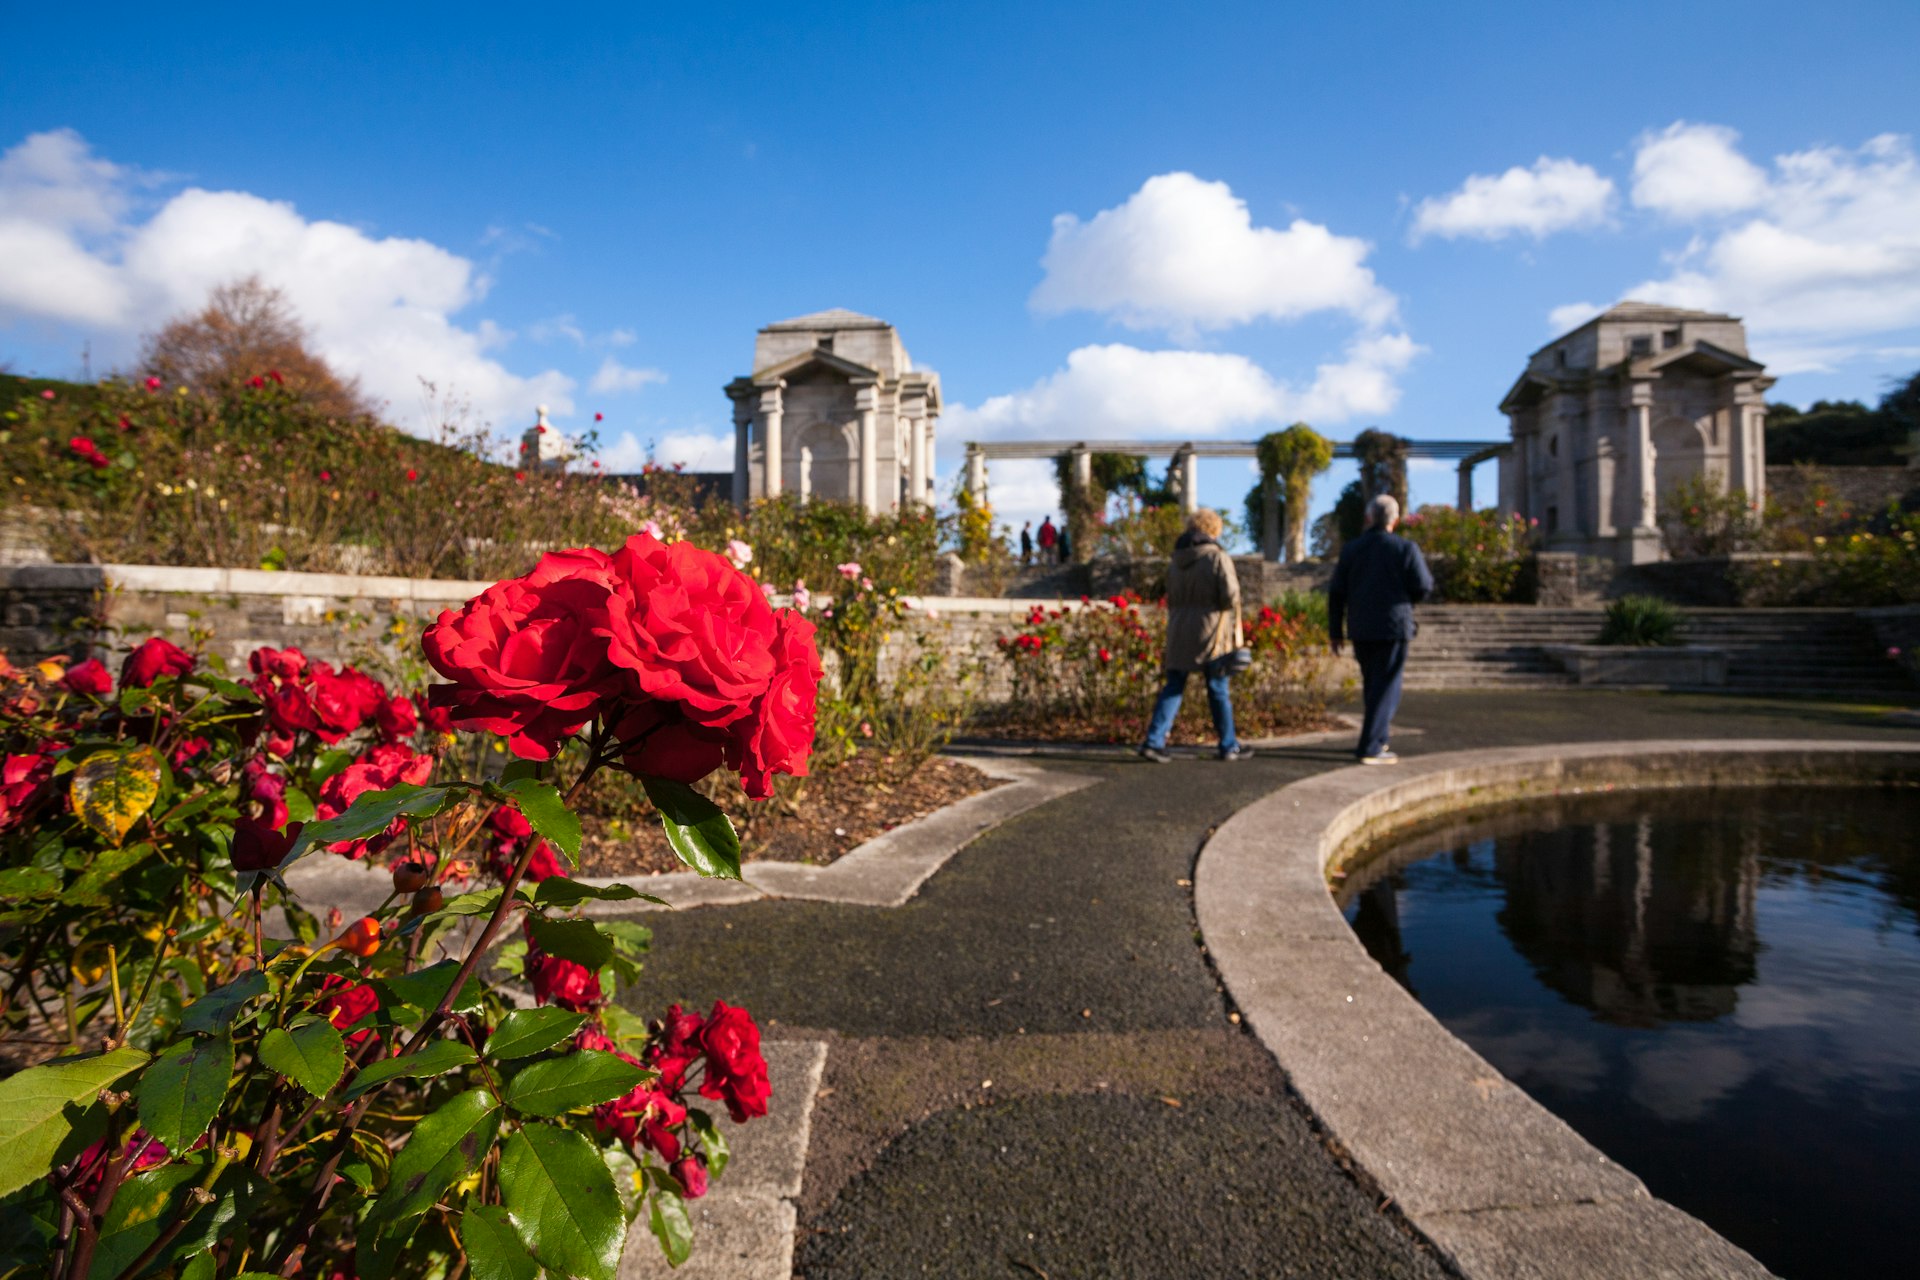 Walking in the War Memorial Gardens in Dublin, Ireland